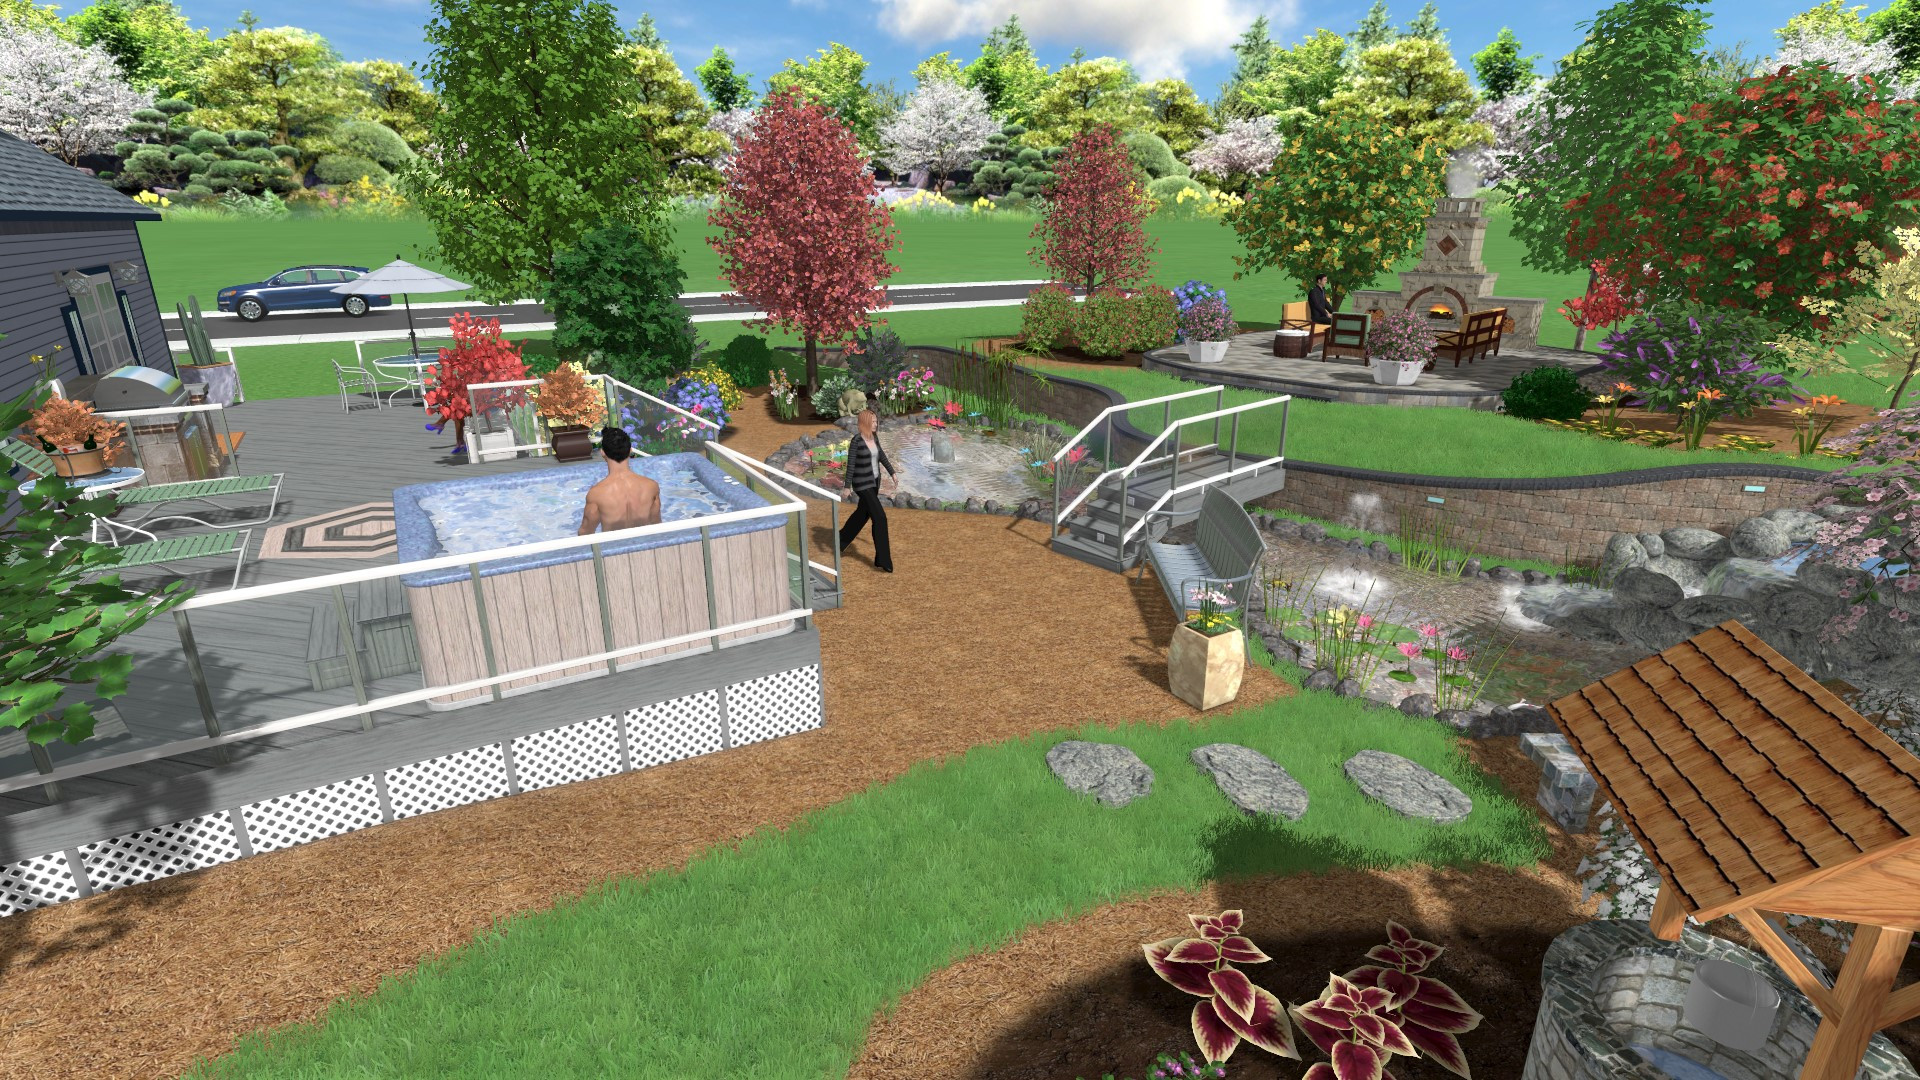 Best ideas about Backyard Landscape Design
. Save or Pin Landscape Design Software Gallery Now.